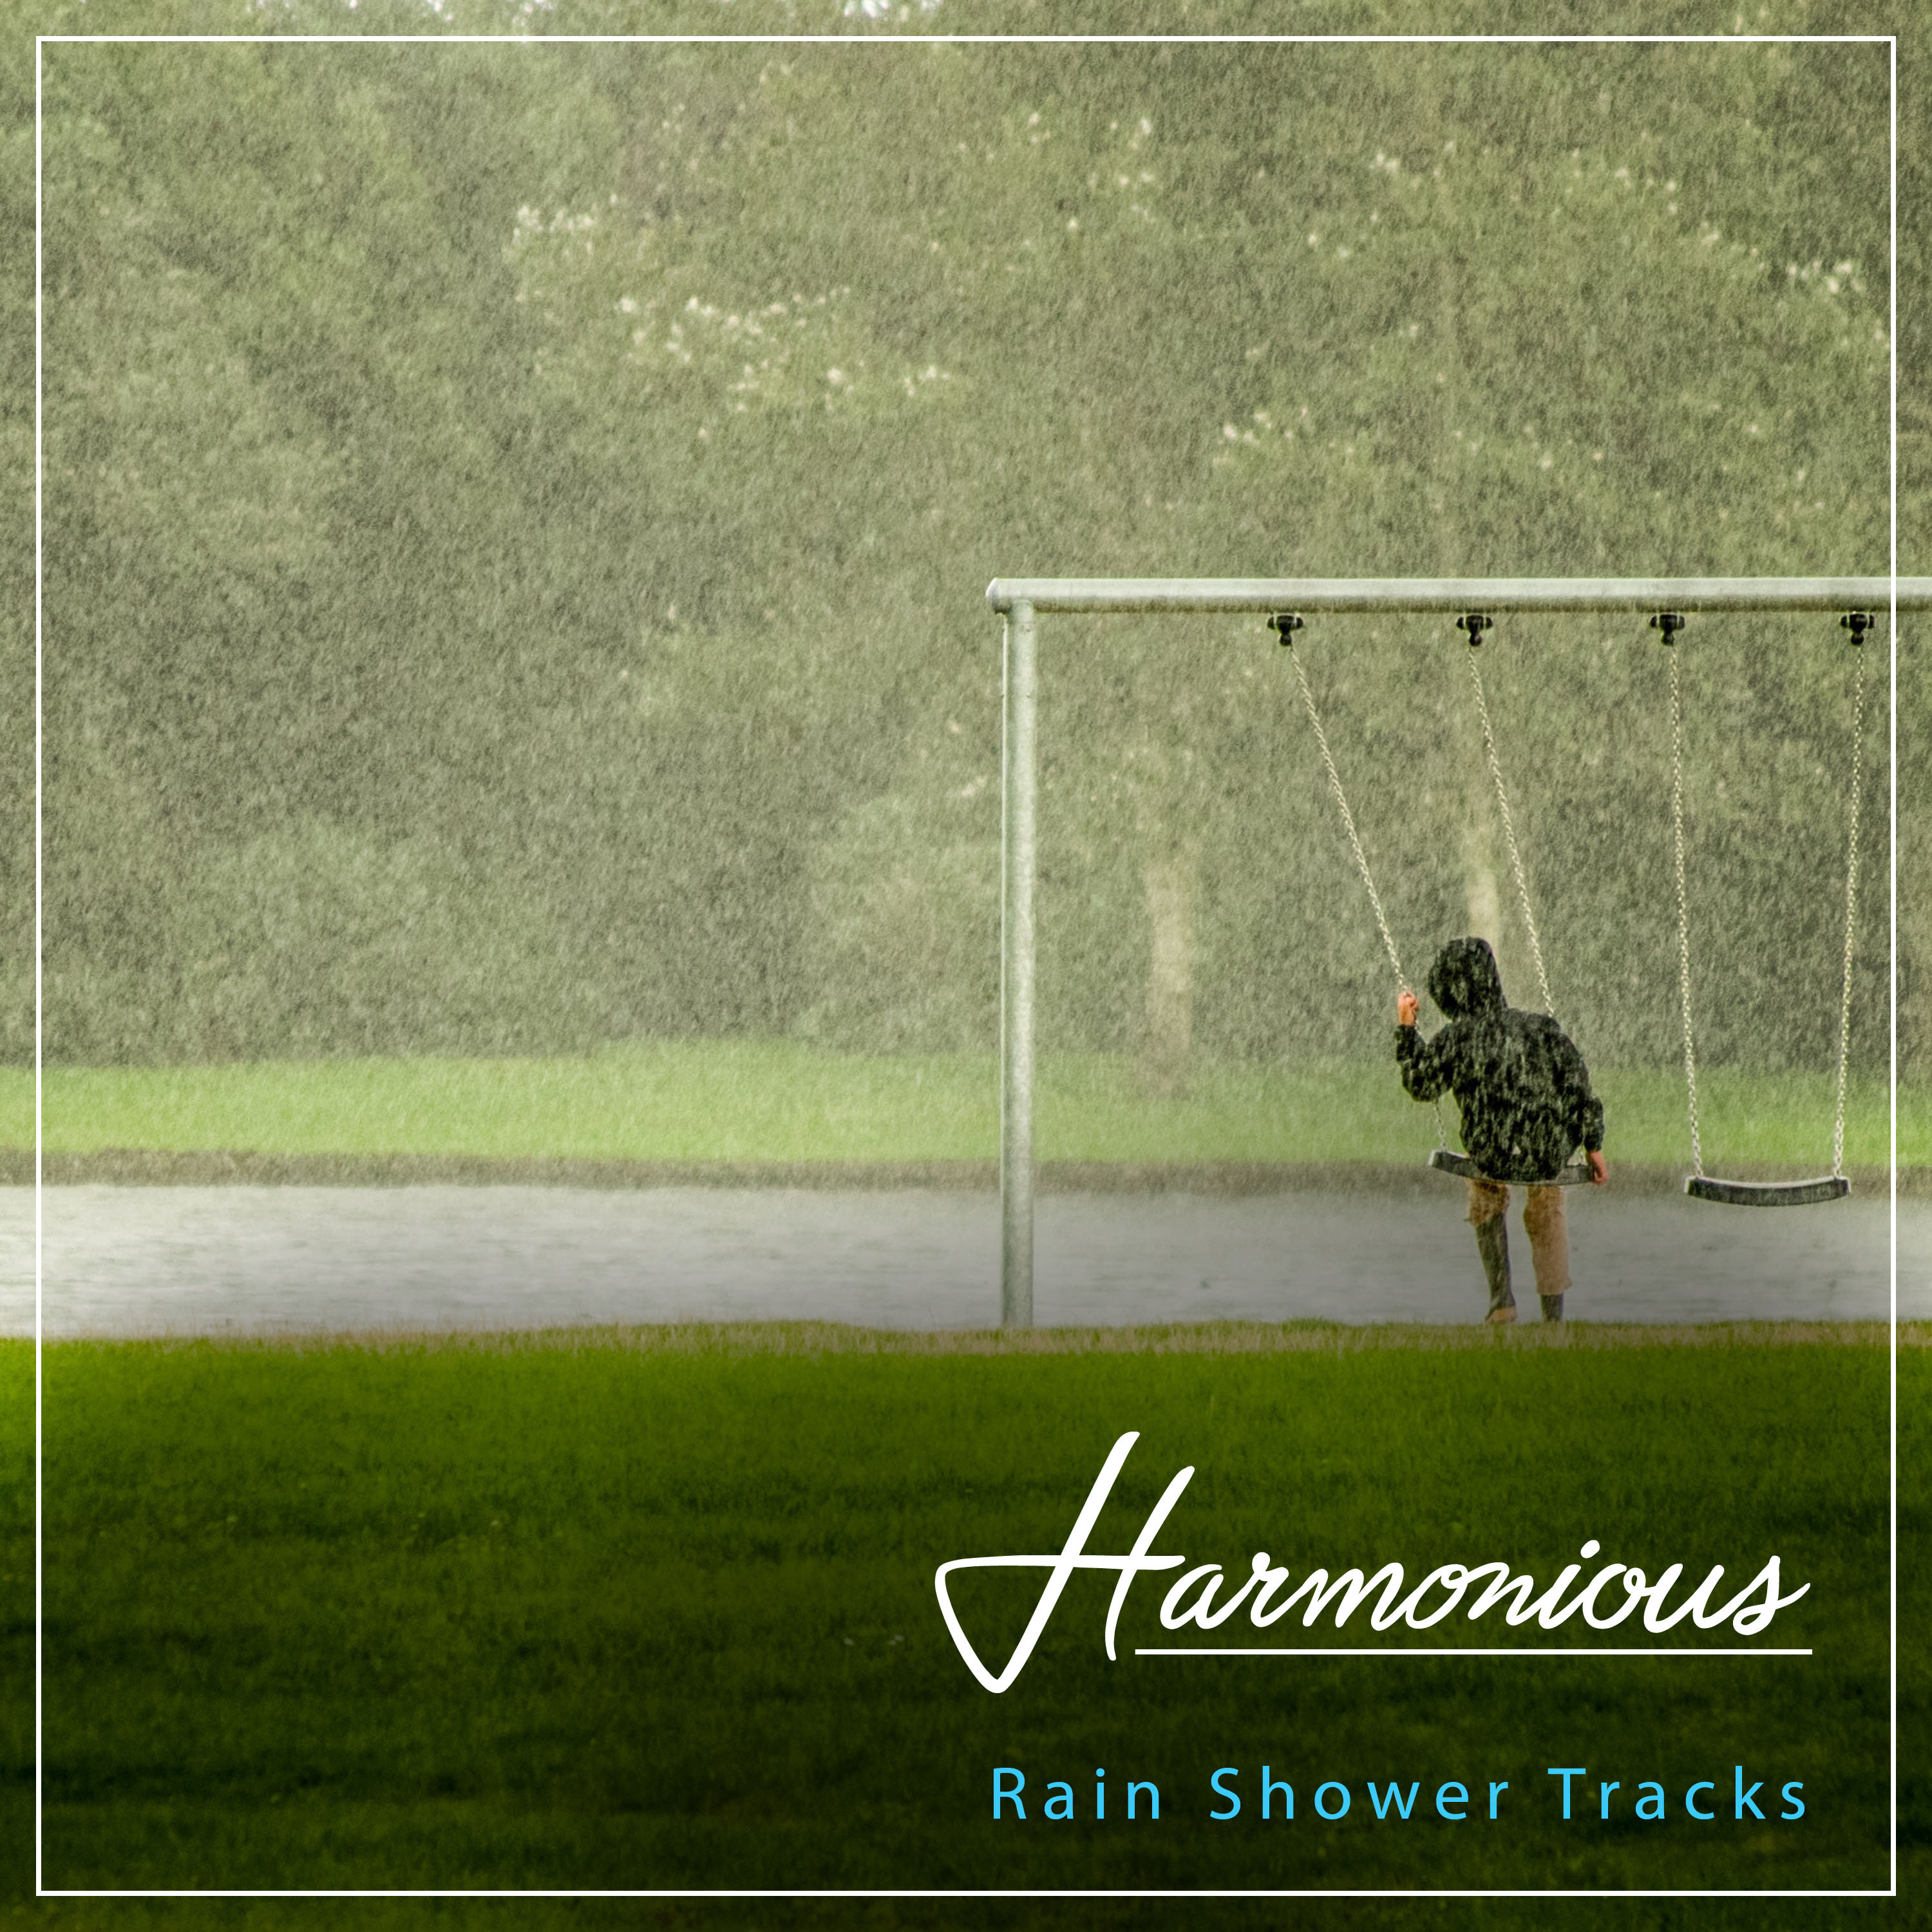 #21 Harmonious Rain Shower Tracks from Mother Nature